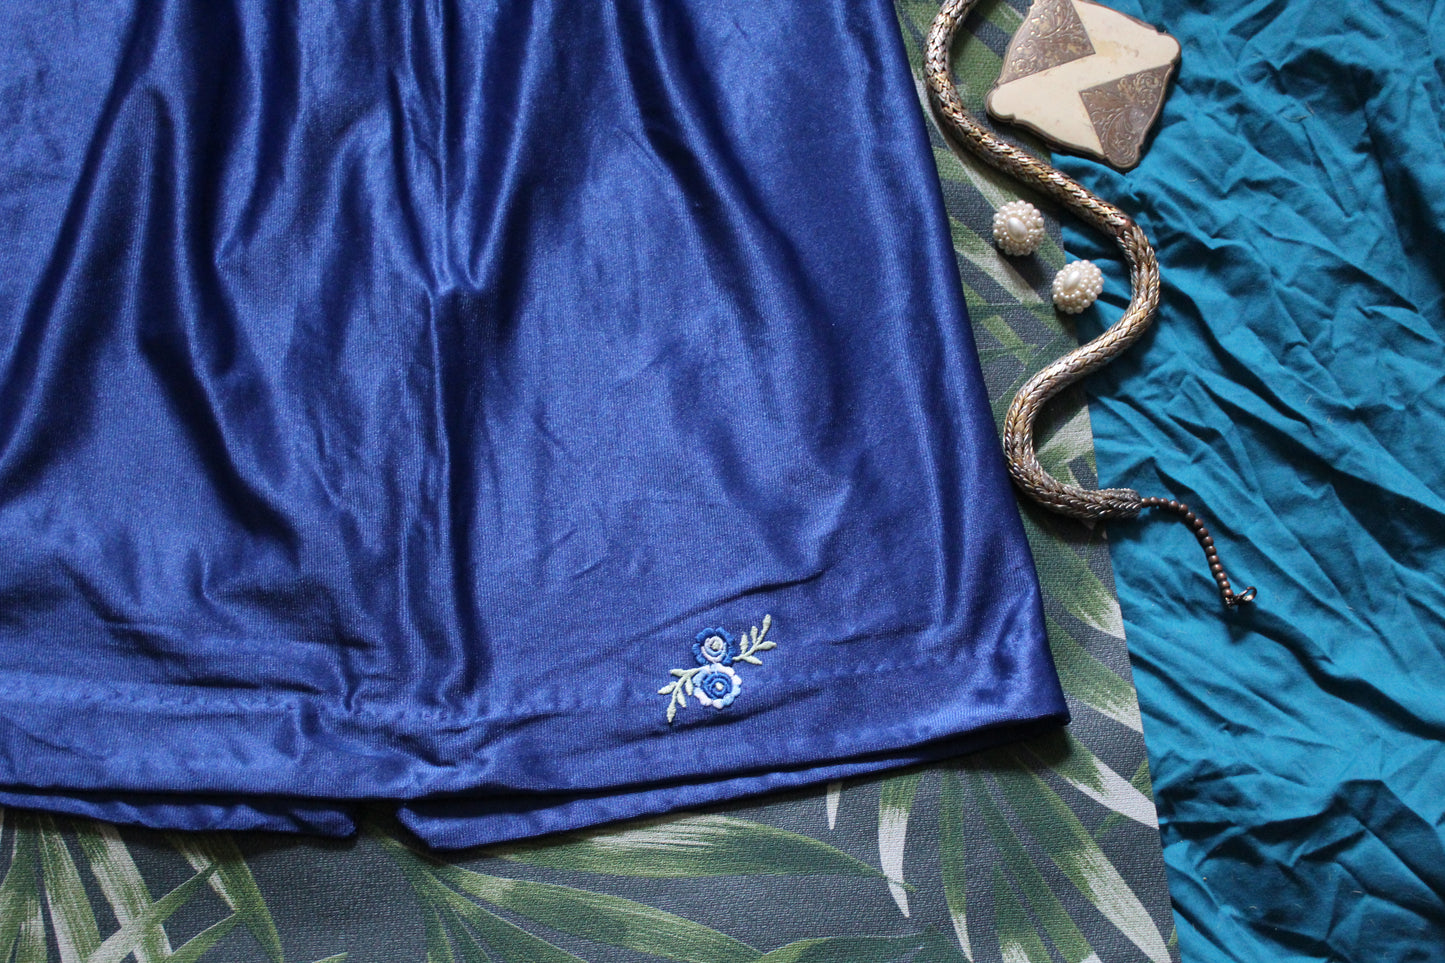 Royal blue half slip with floral detail